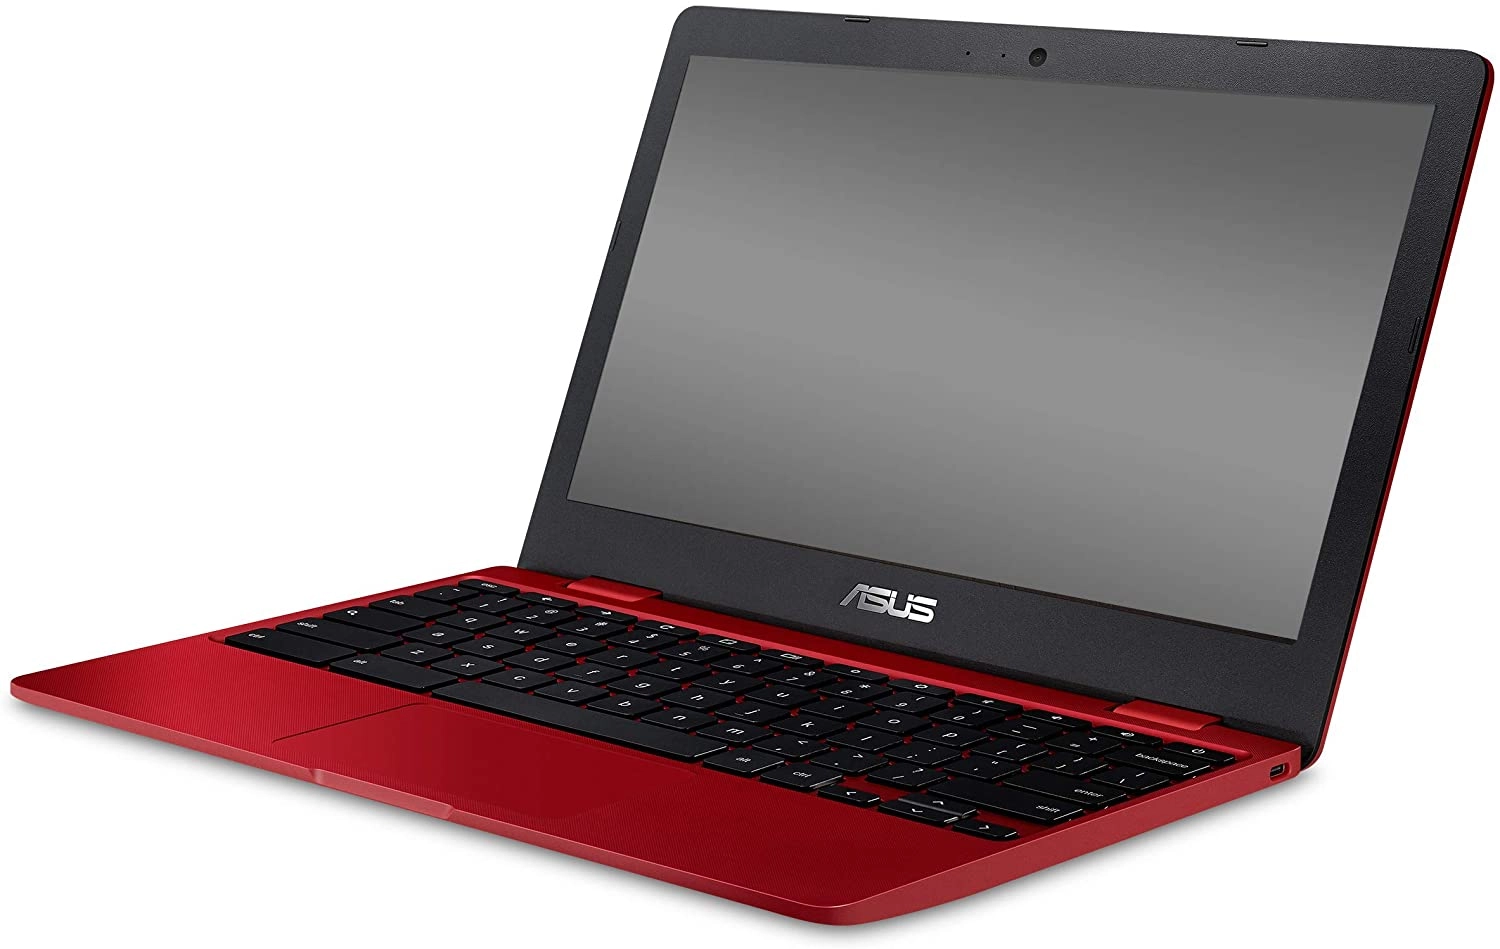 Asus Chromebook 12 laptop image